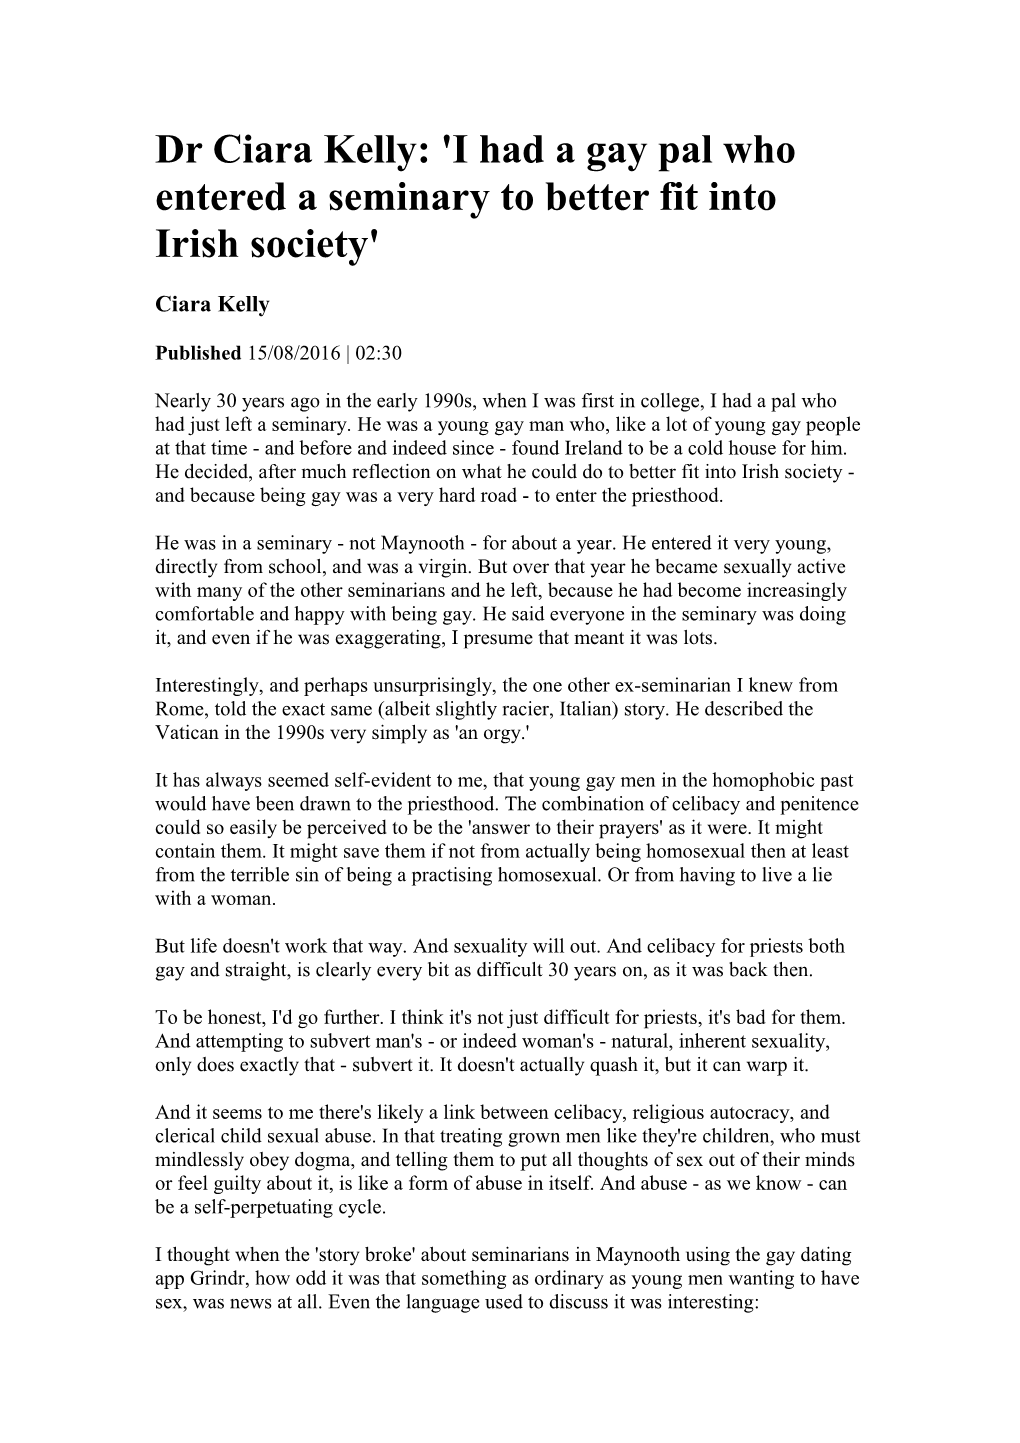 Dr Ciara Kelly: 'I Had a Gay Pal Who Entered a Seminary to Better Fit Into Irish Society'